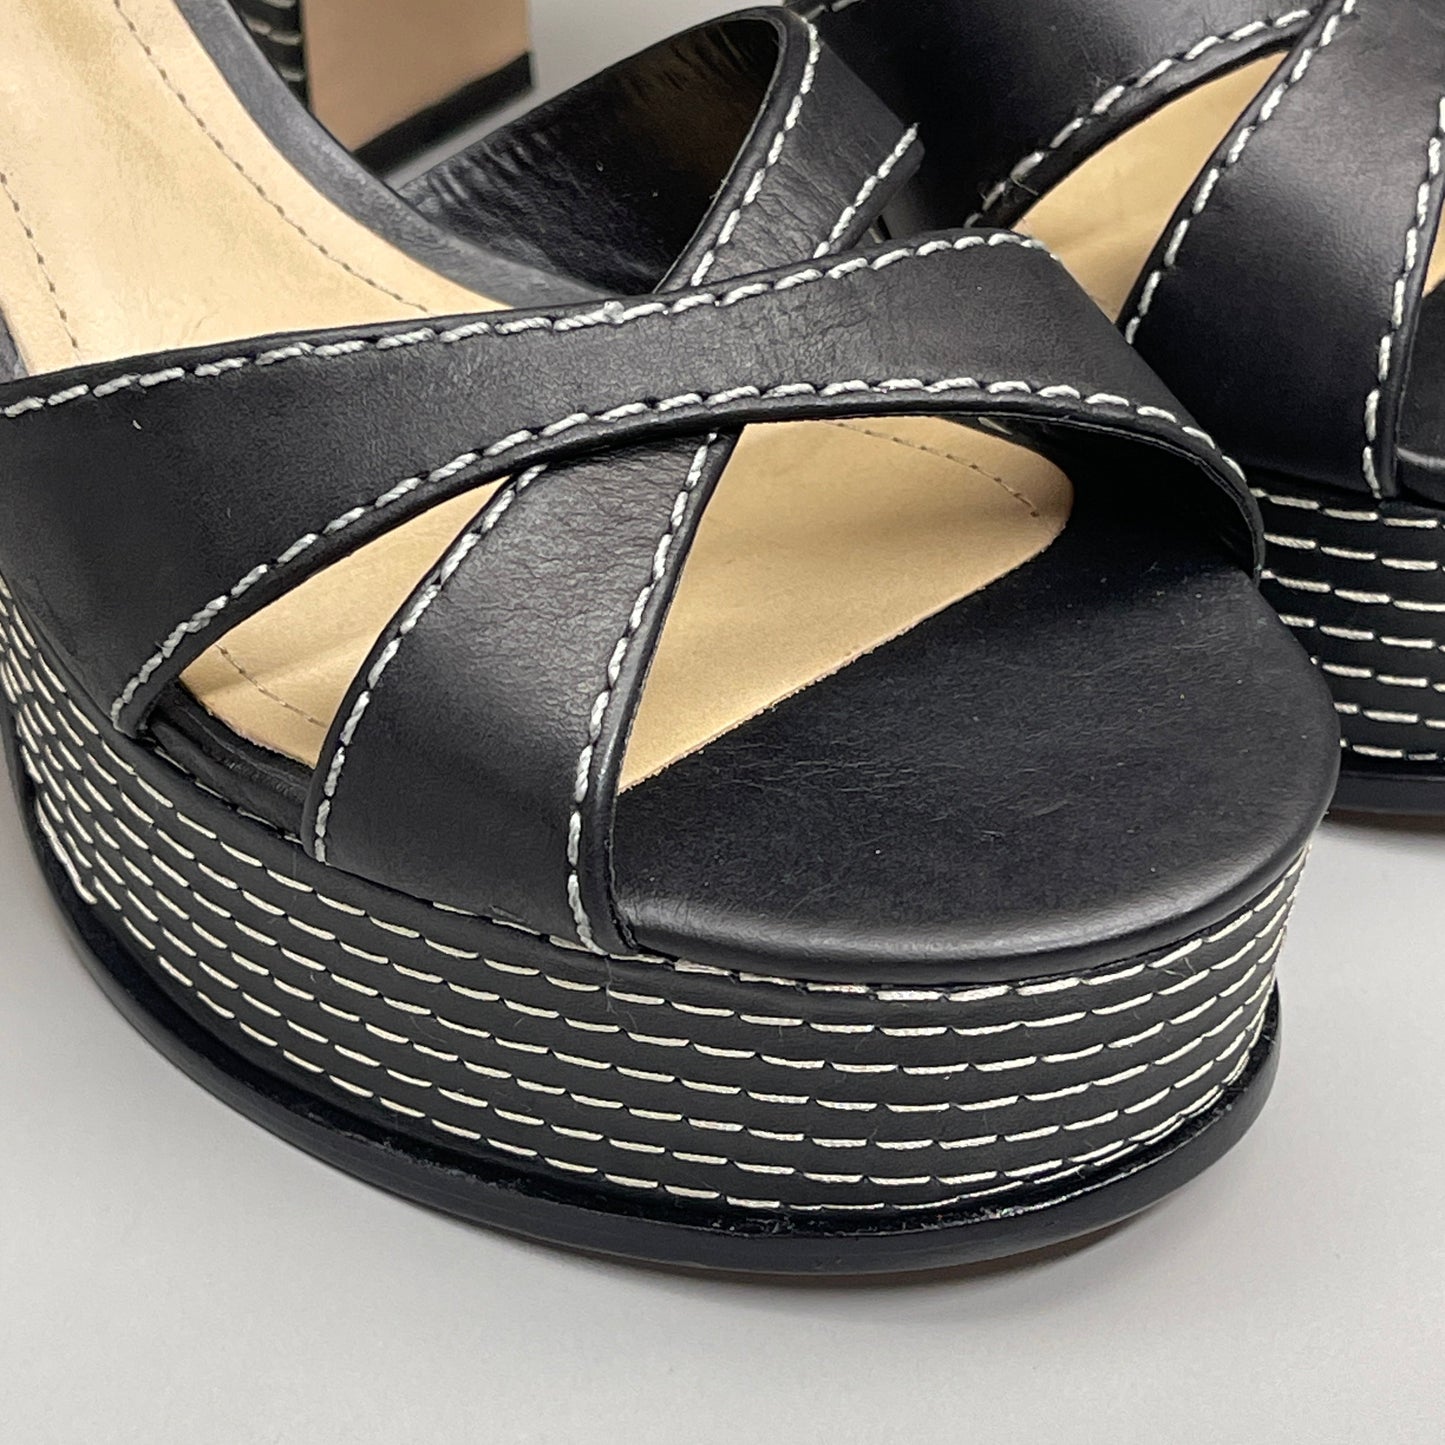 SCHUTZ Keefa Casual Women's Leather Sandal Black Platform 4" Heel Shoes Sz 7.5B (New)